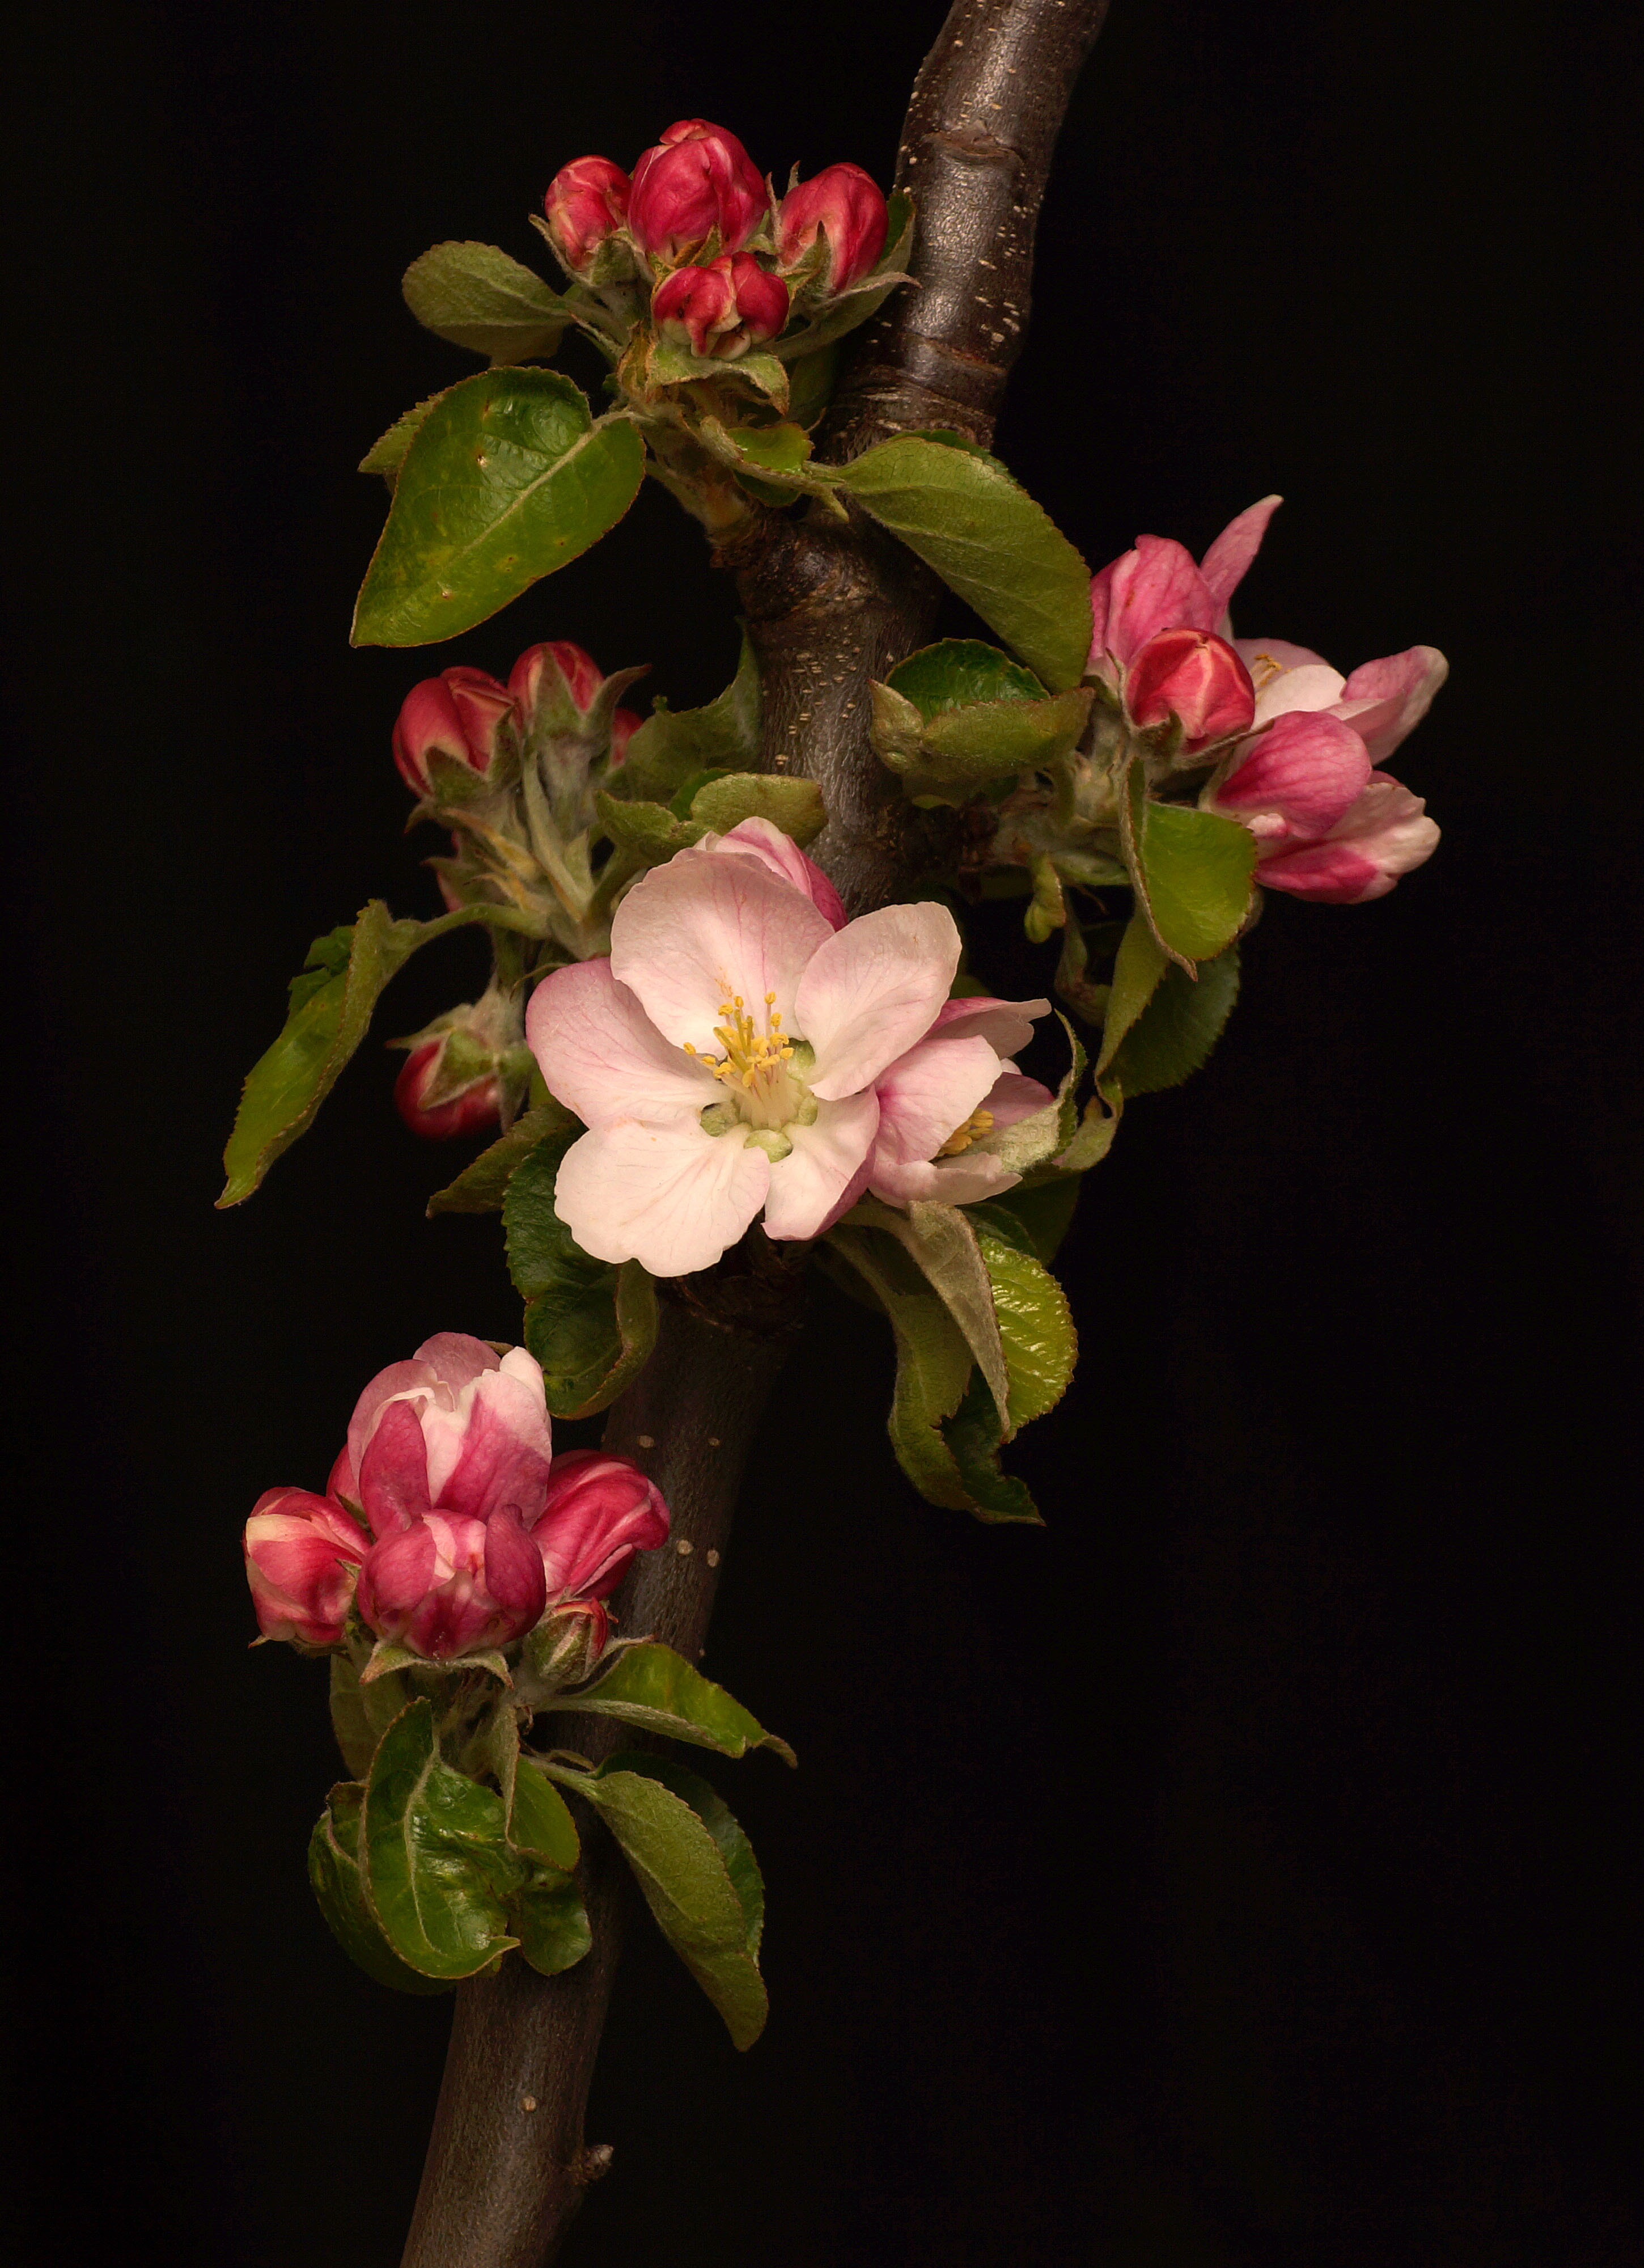 1080p Flowering Hd Images